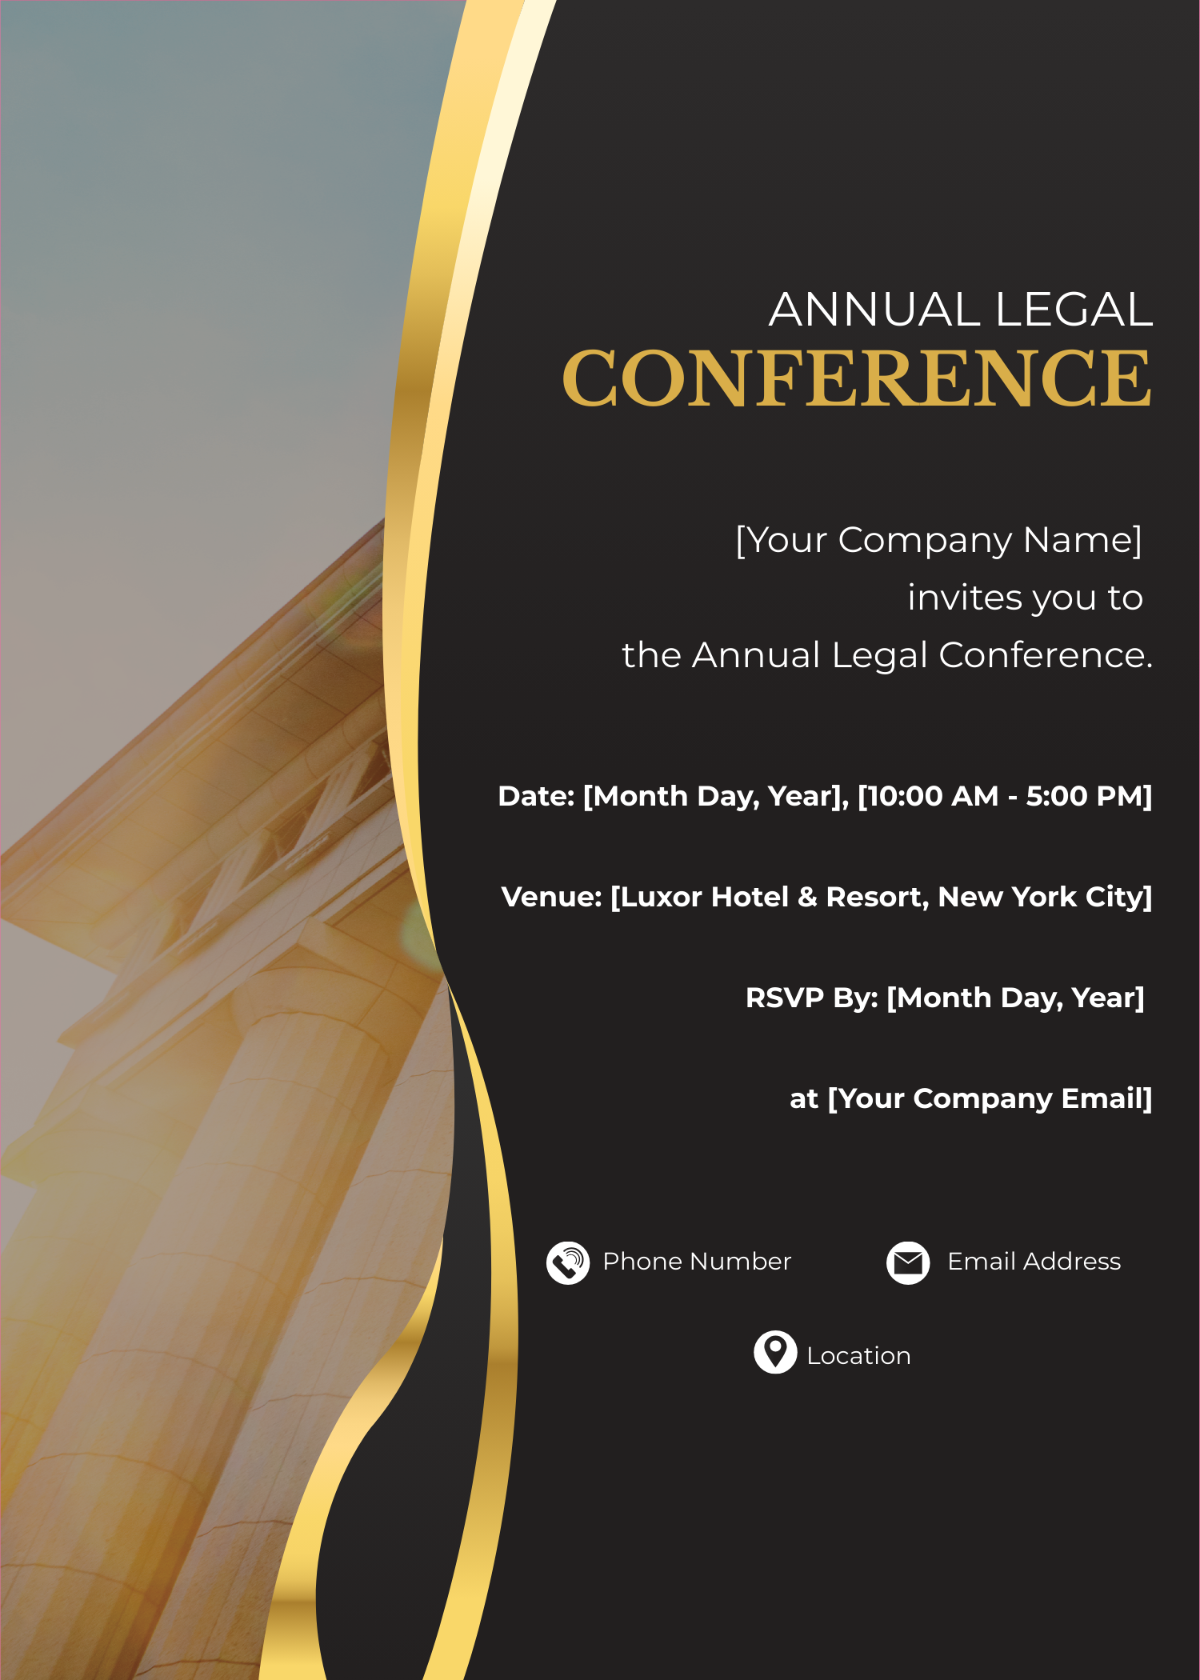 Annual Legal Conference Invitation Card Template